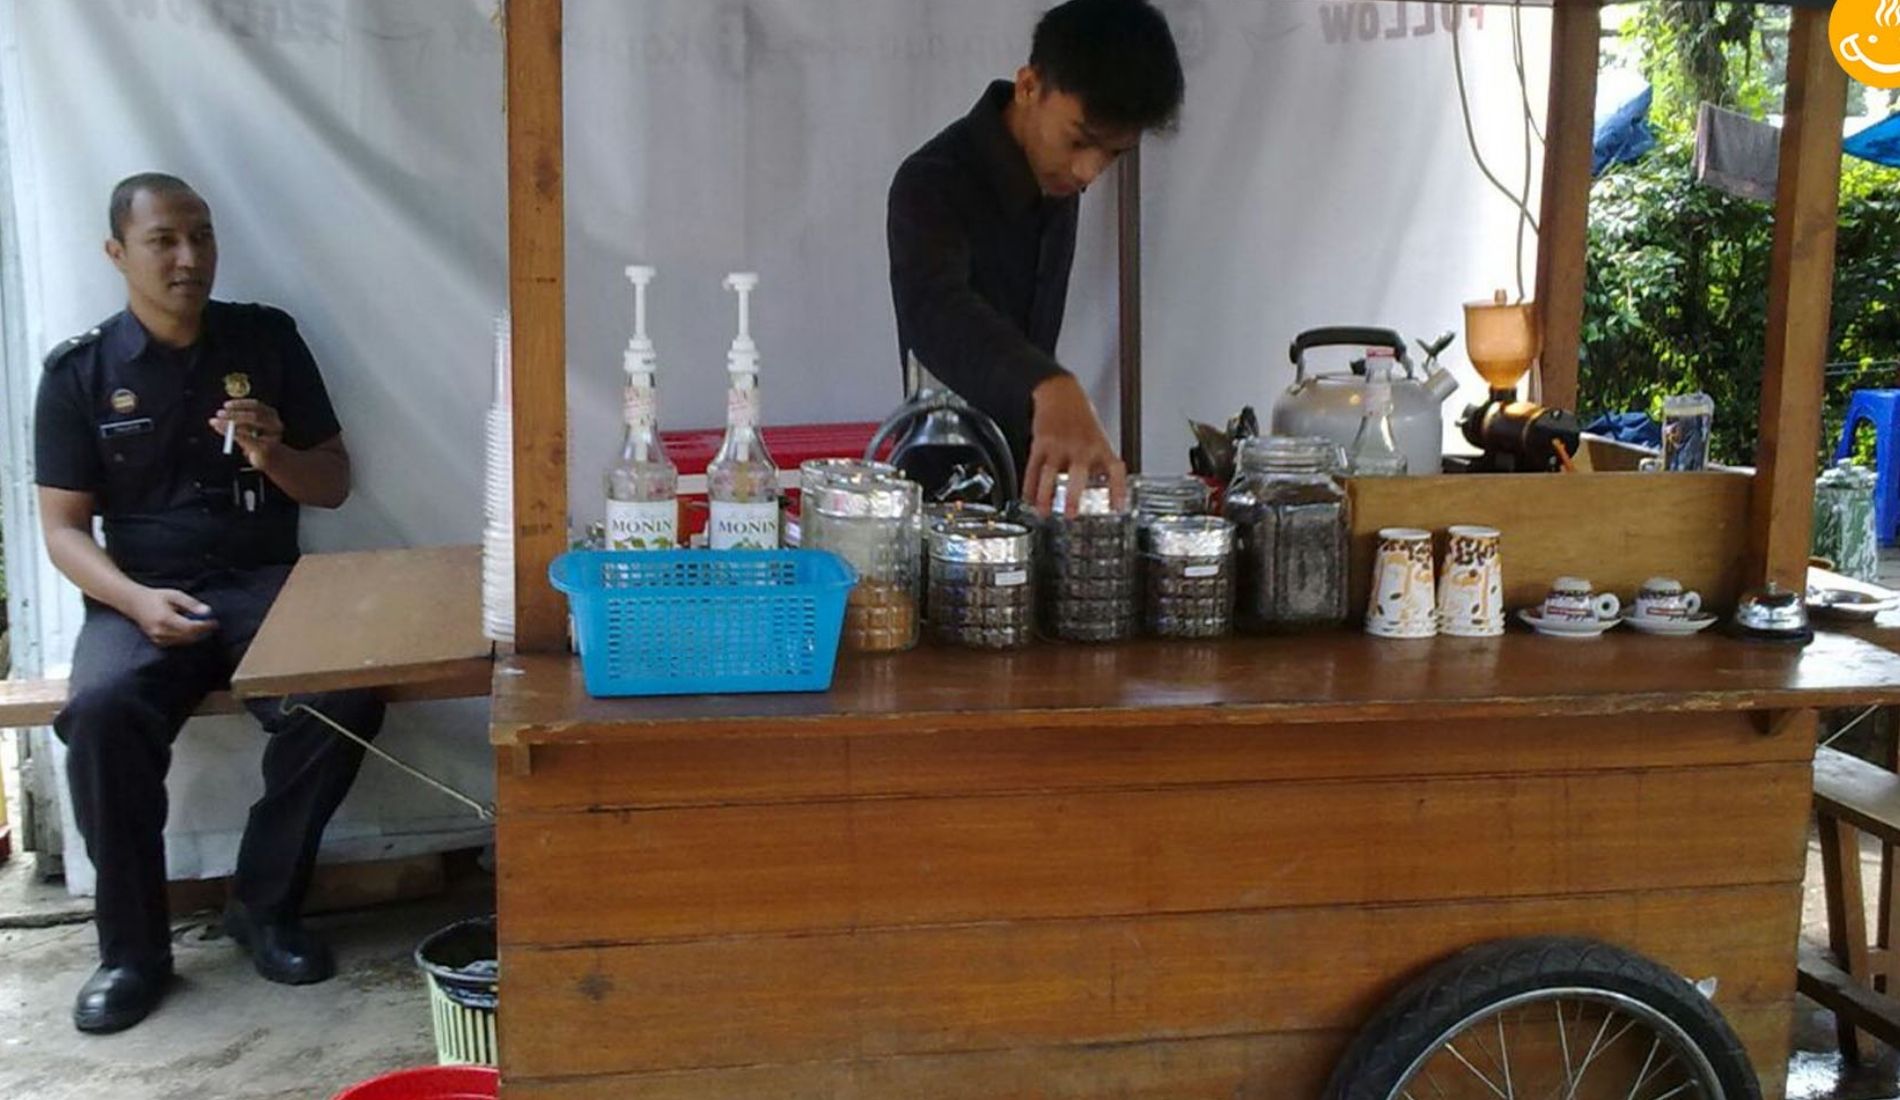 Gerobak Pertama Nata Coffee - Image: Dok Pribadi Nata Coffee